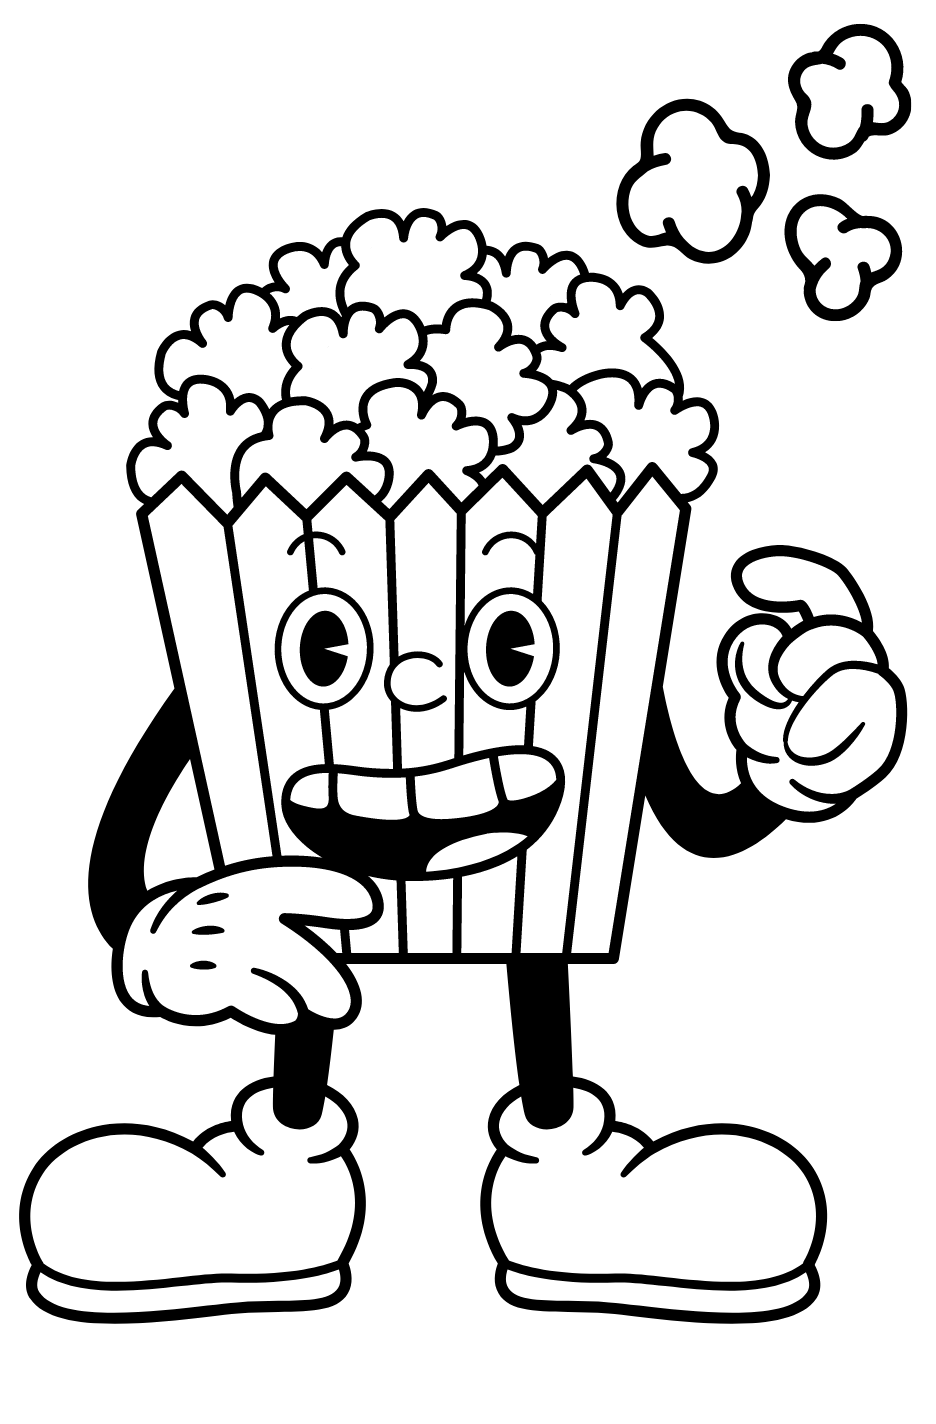 Lustige Popcorn-Malseite